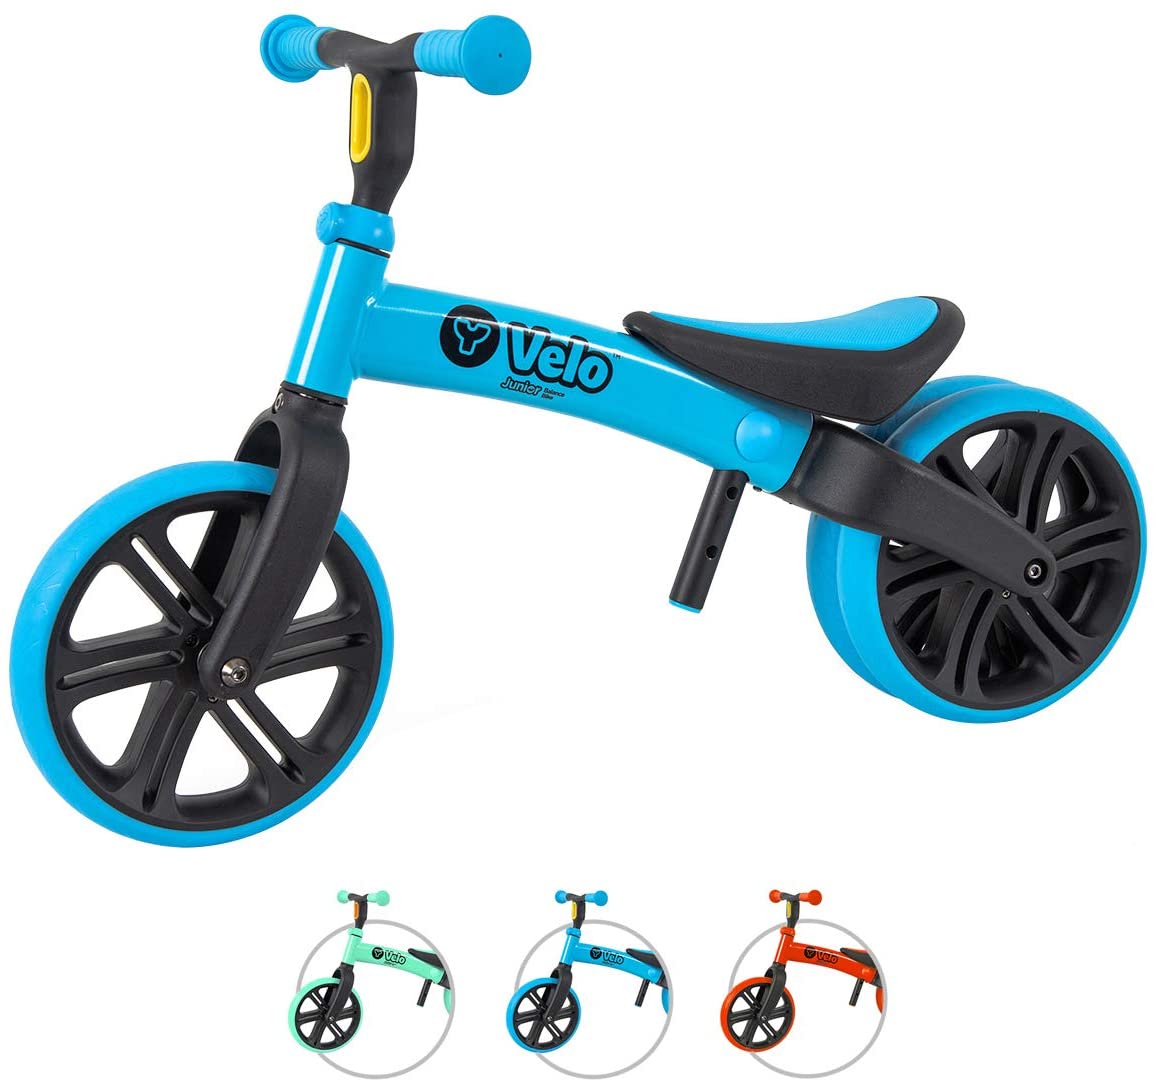 Yvolution Y Velo Junior Toddler No-Pedal Balance Bike